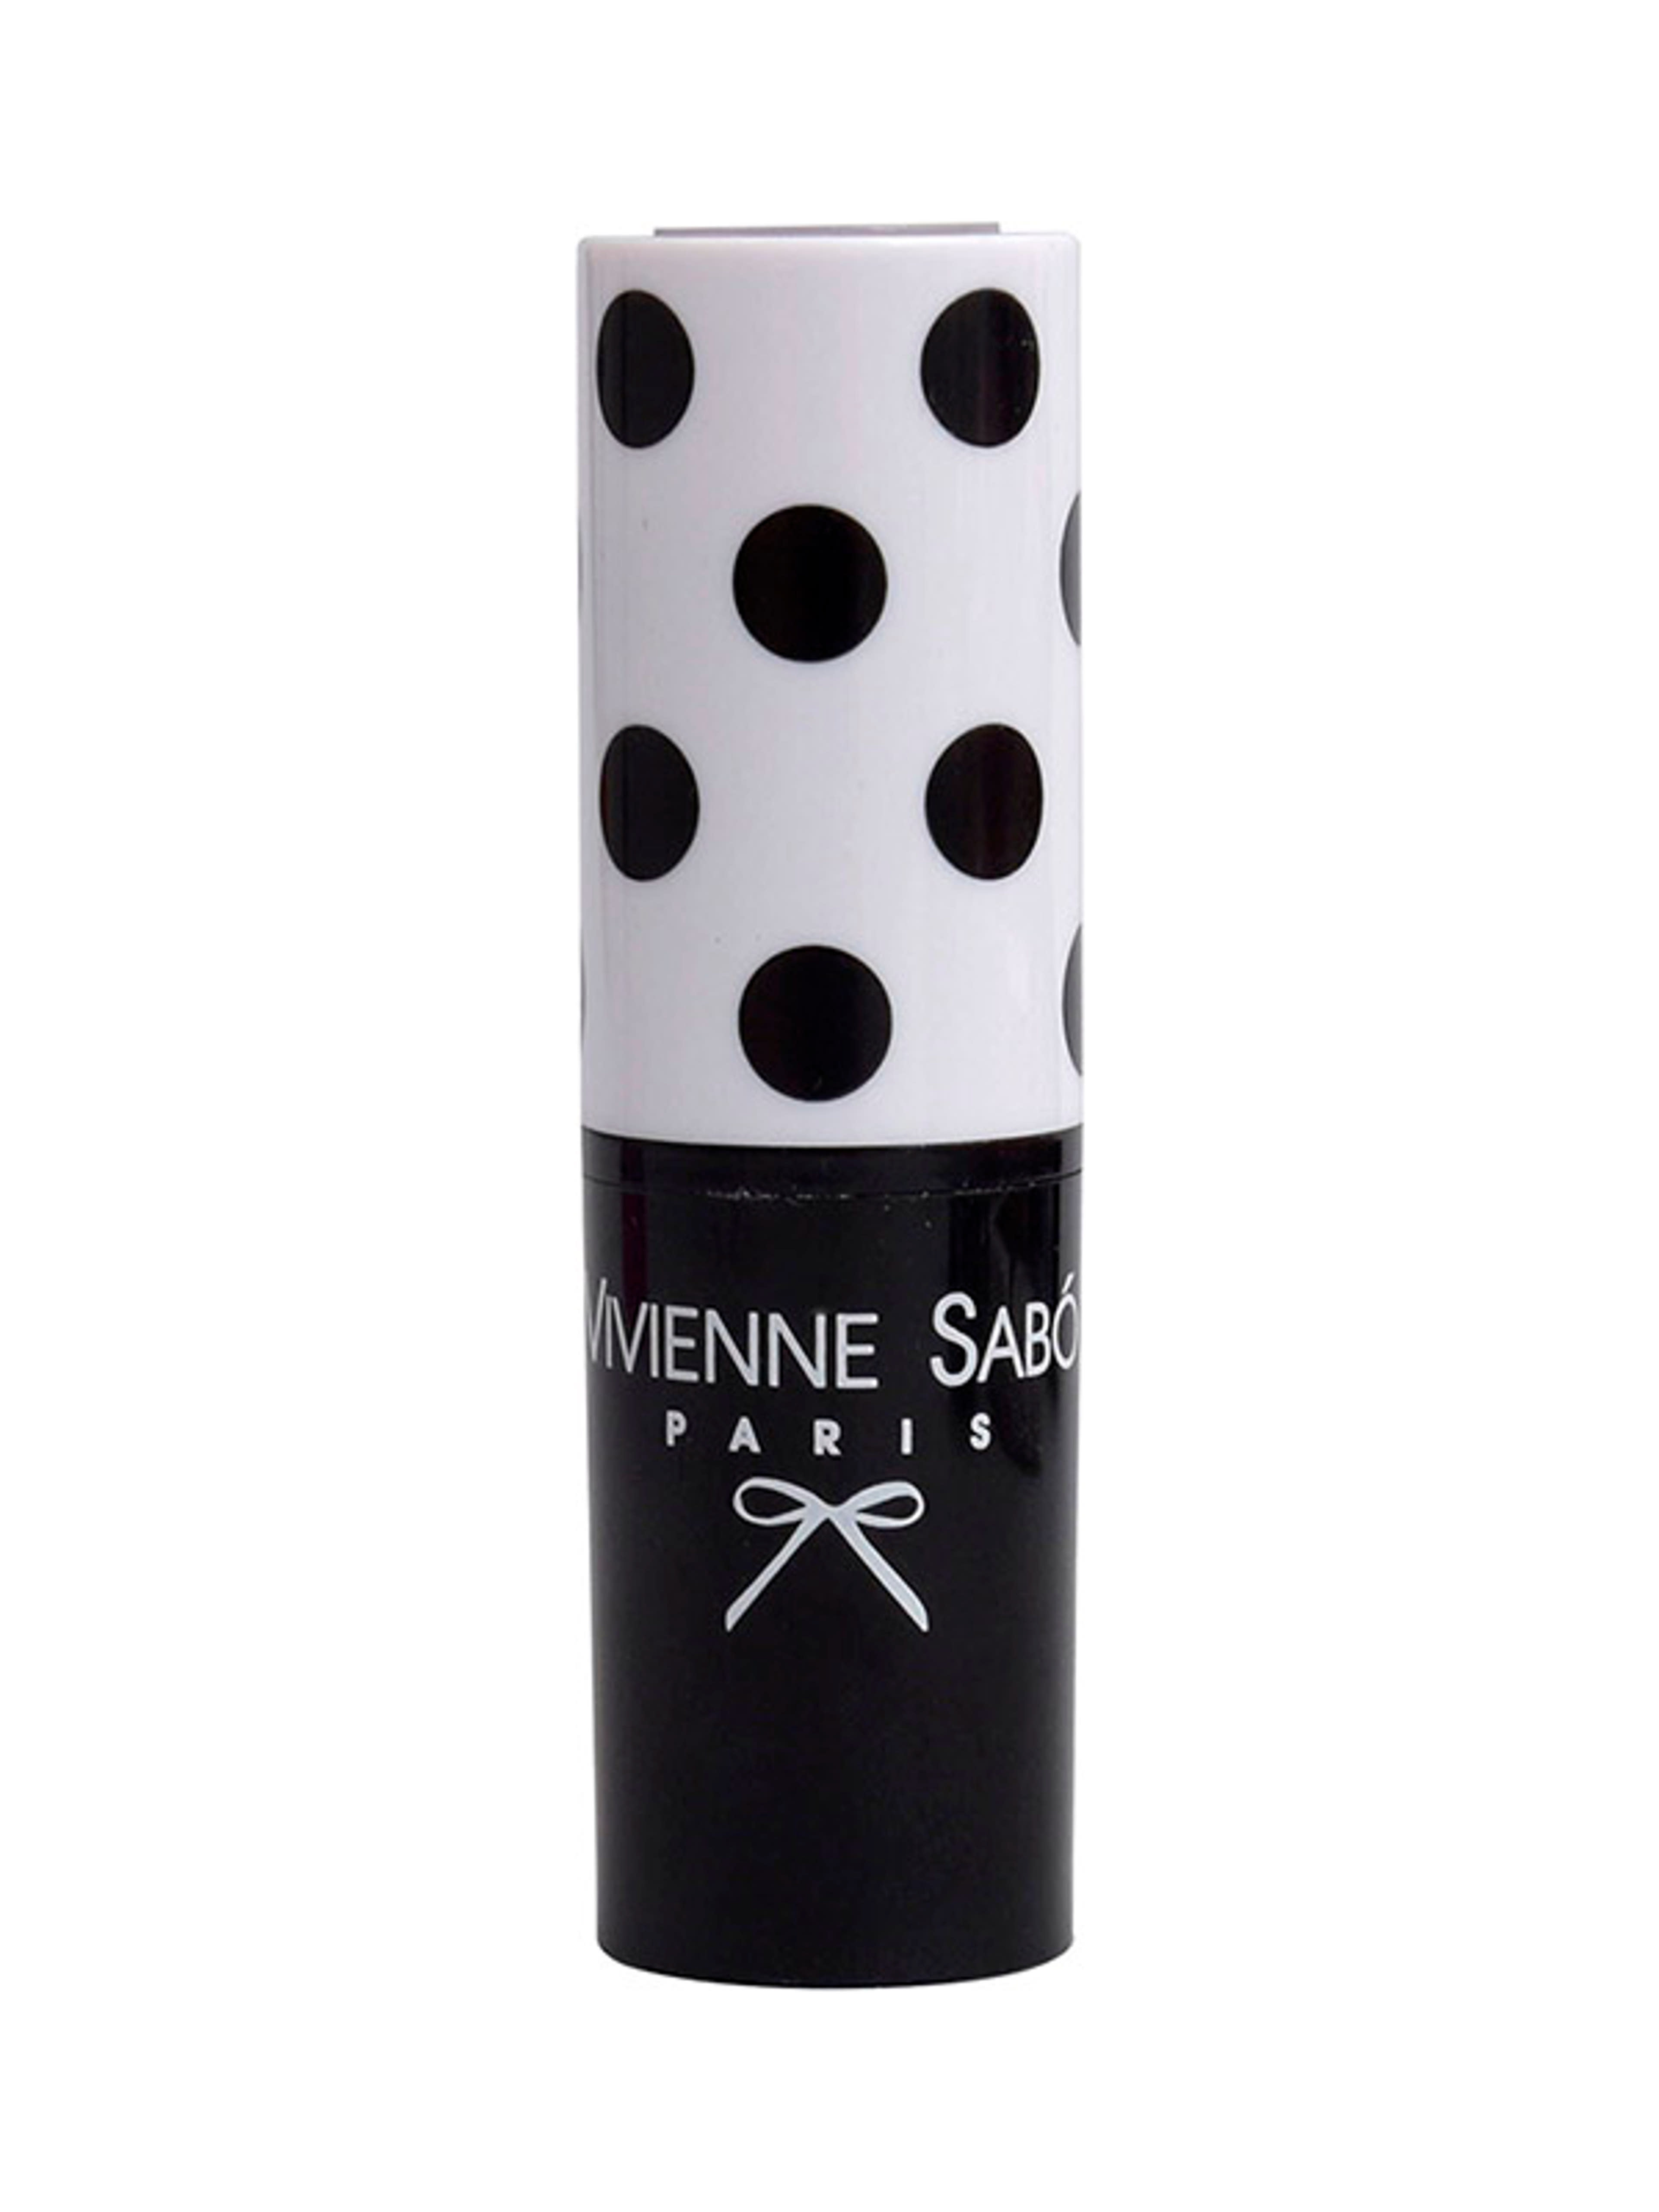 Vivienne Sabo rúzs merci 14 - 1 db-1